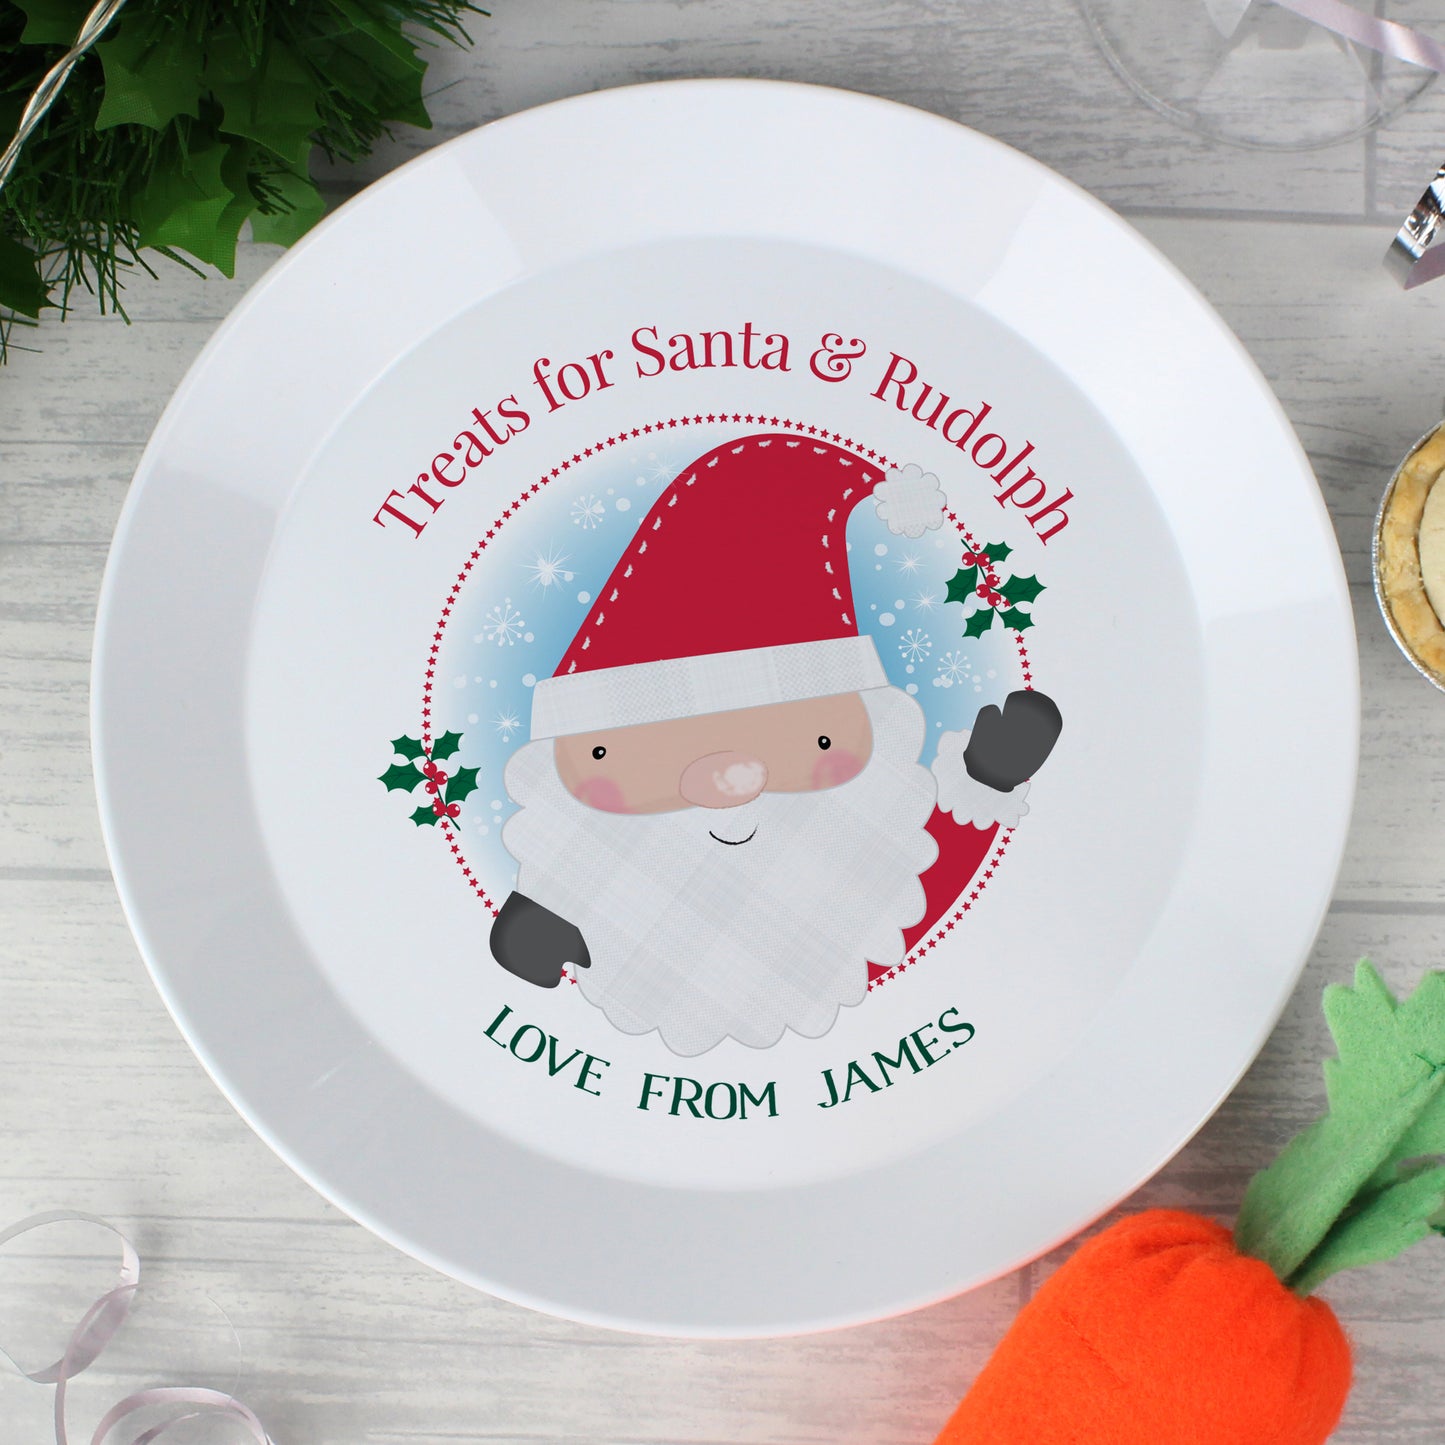 Santa Christmas Eve mince pie plastic plate - Lilybet loves